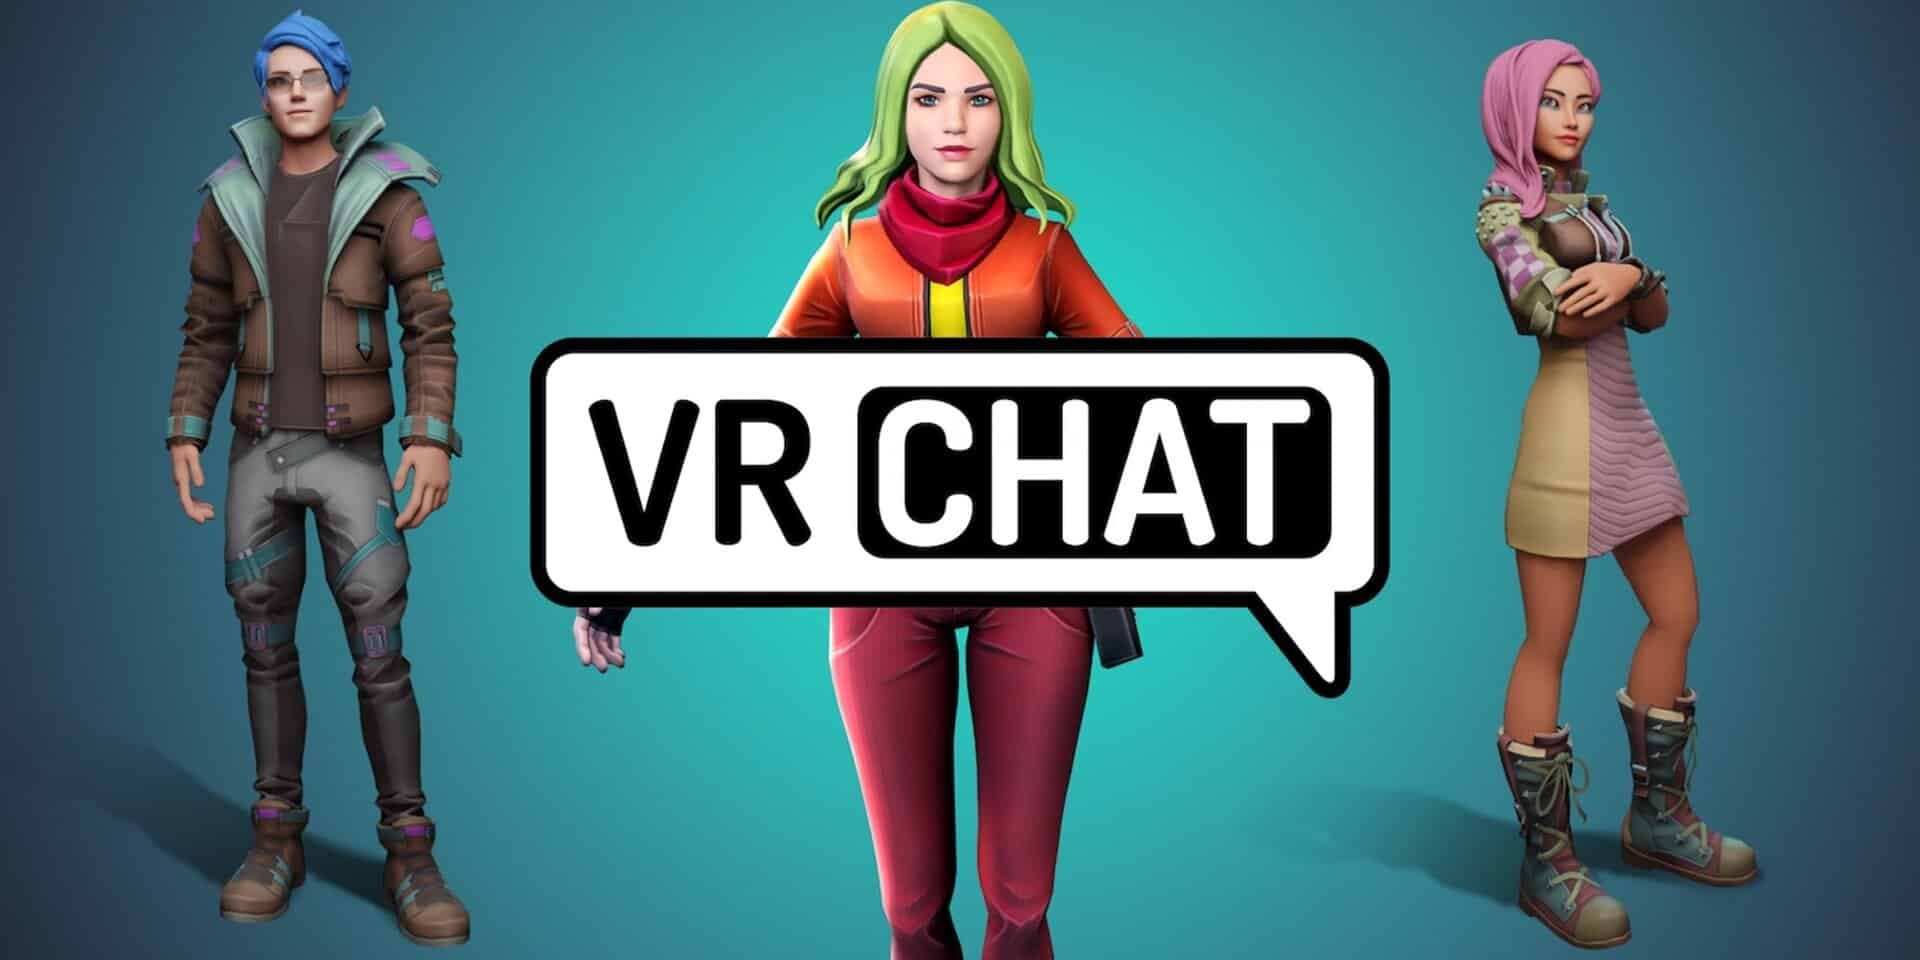 VRChat Avatar Creation Gets Simpler with Free Customizable Avatars   LaptrinhX